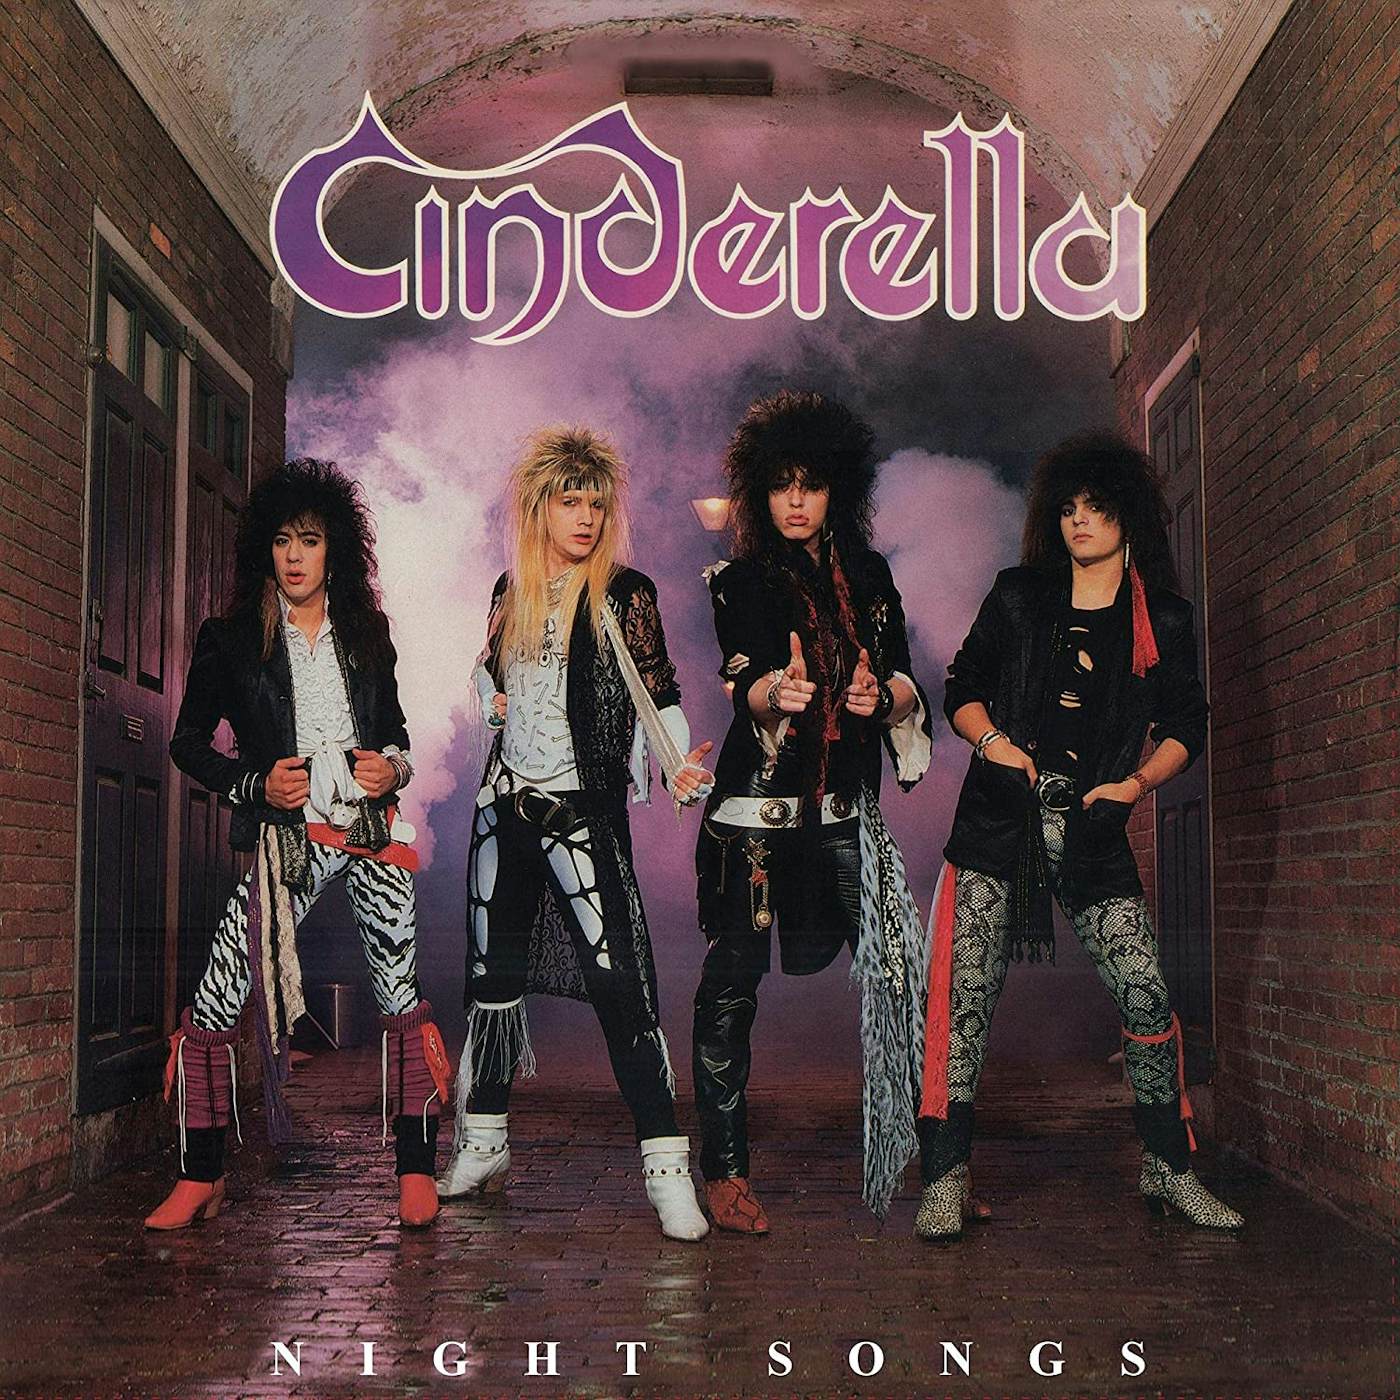 Cinderella NIGHT SONGS (180G/VIOLET VINYL/LIMITED ANNIVERSARY EDITION) Vinyl Record